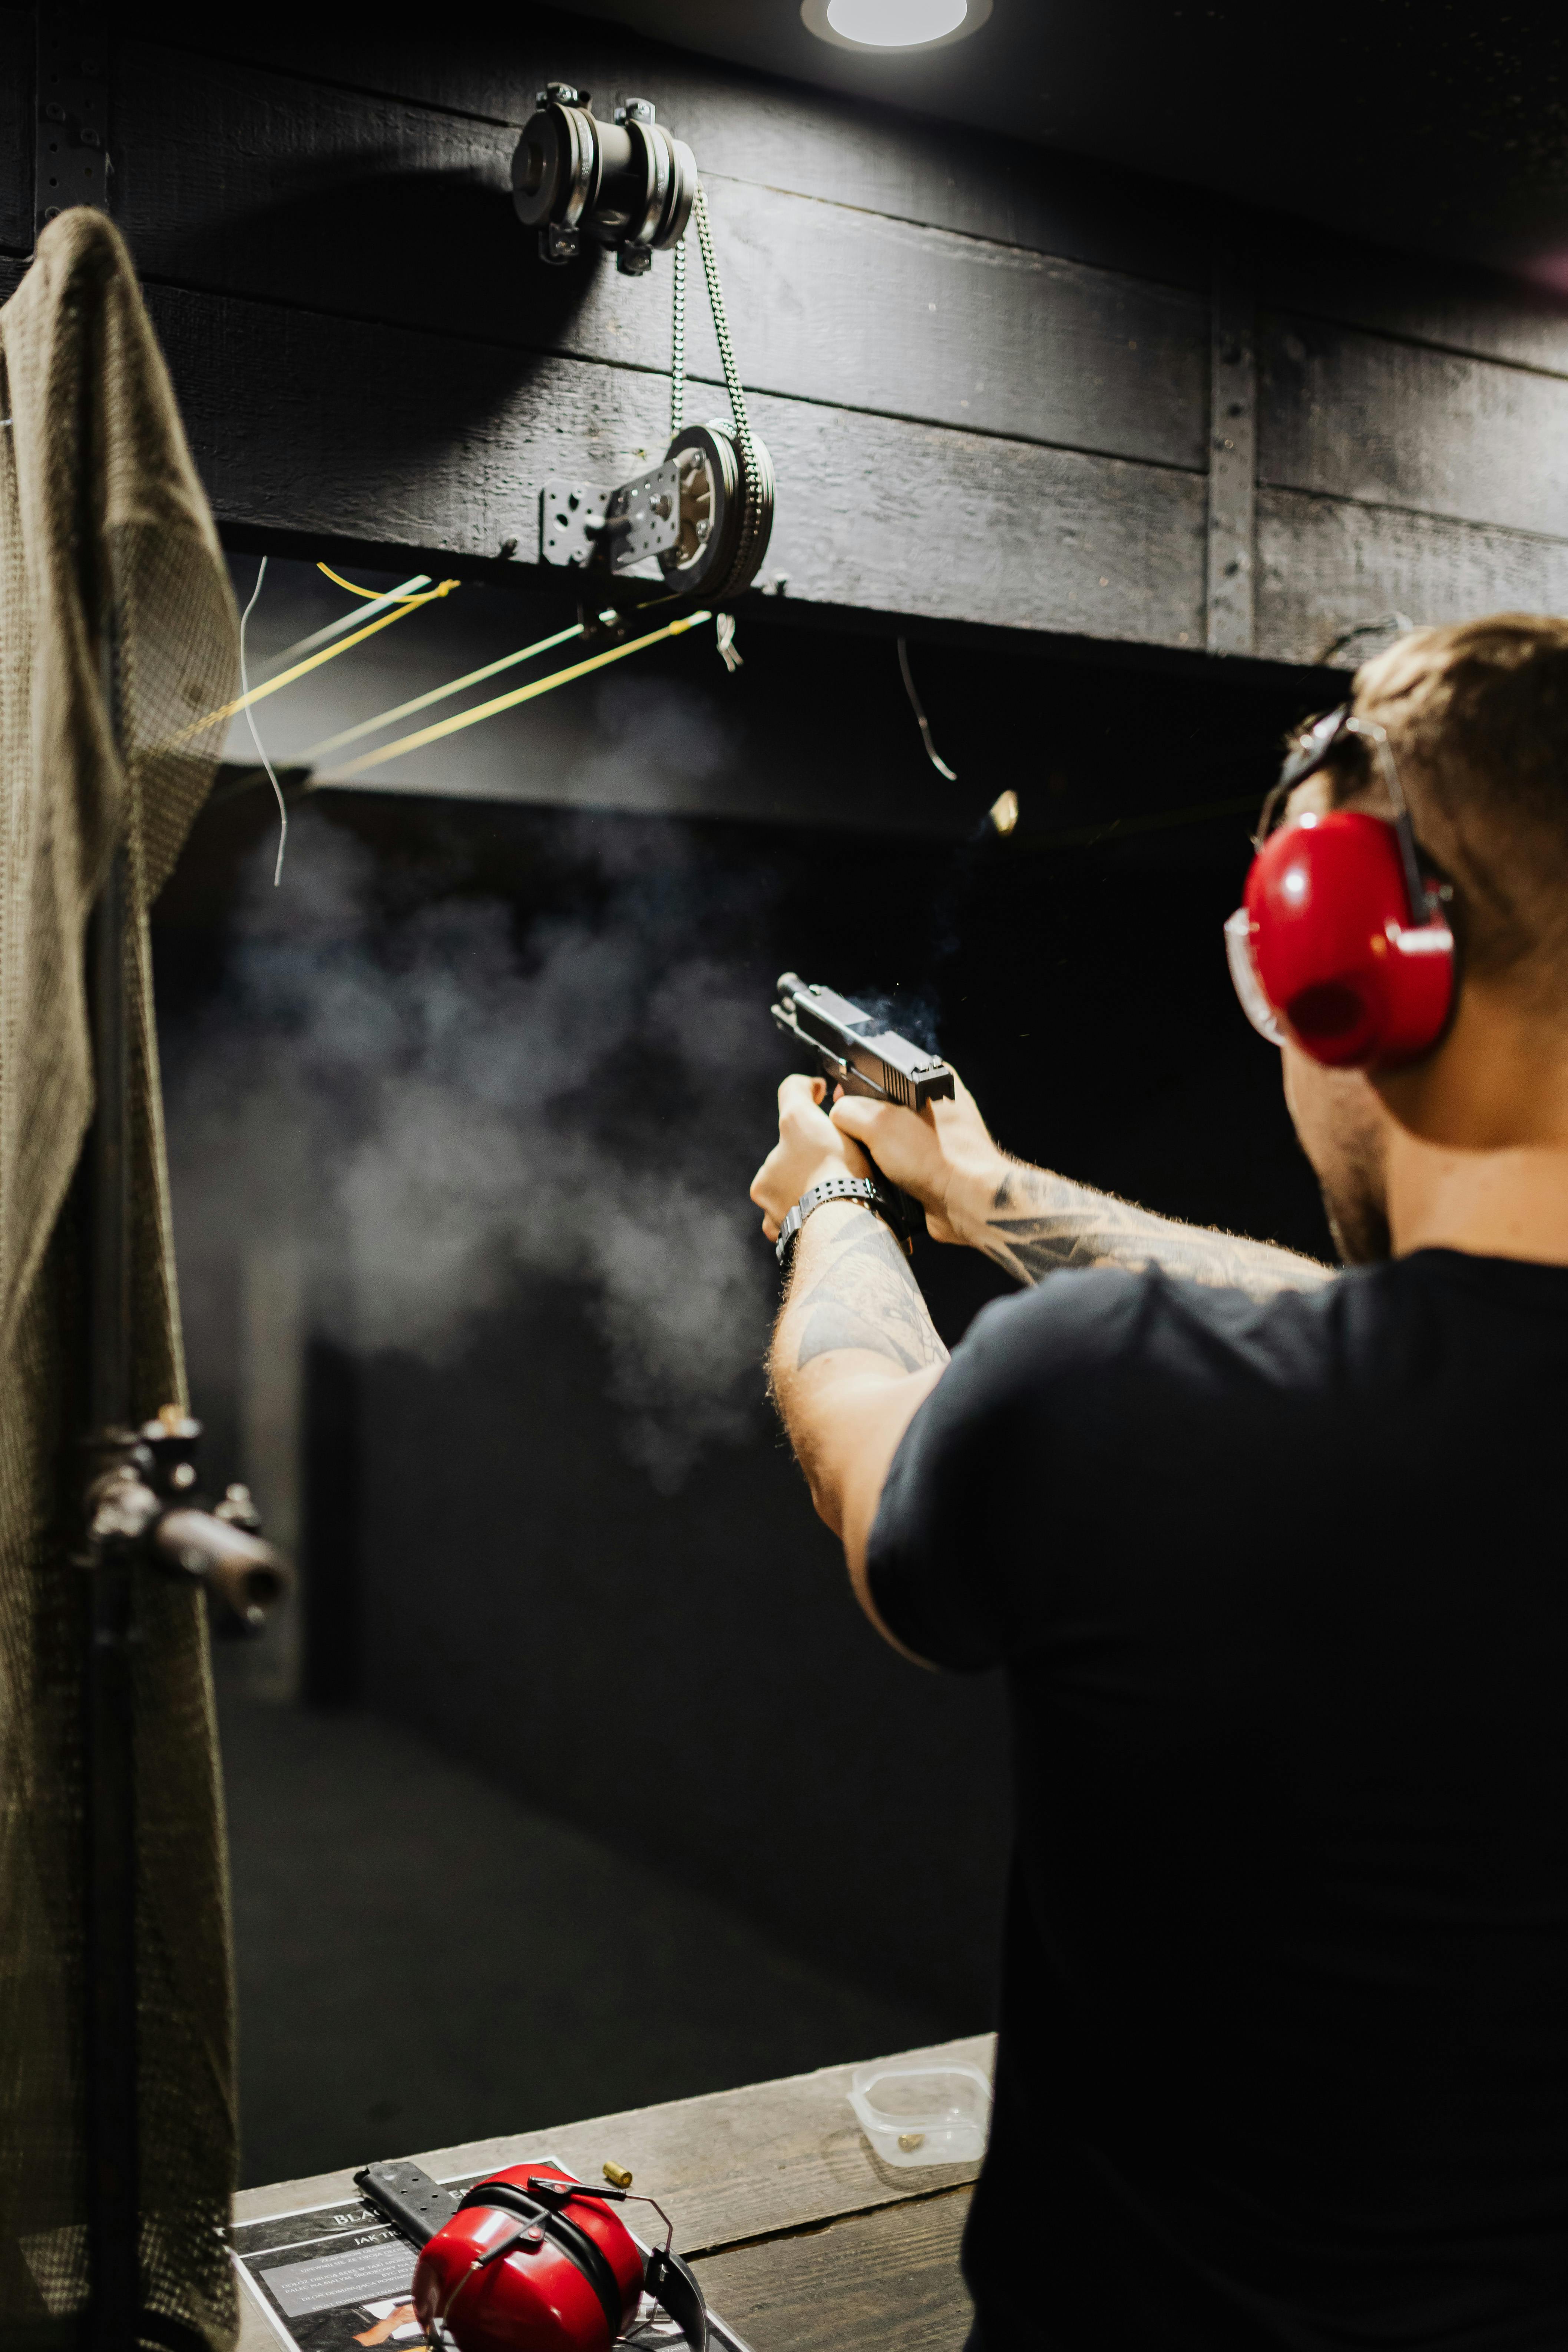 Shooting Range Photos, Download The BEST Free Shooting Range Stock